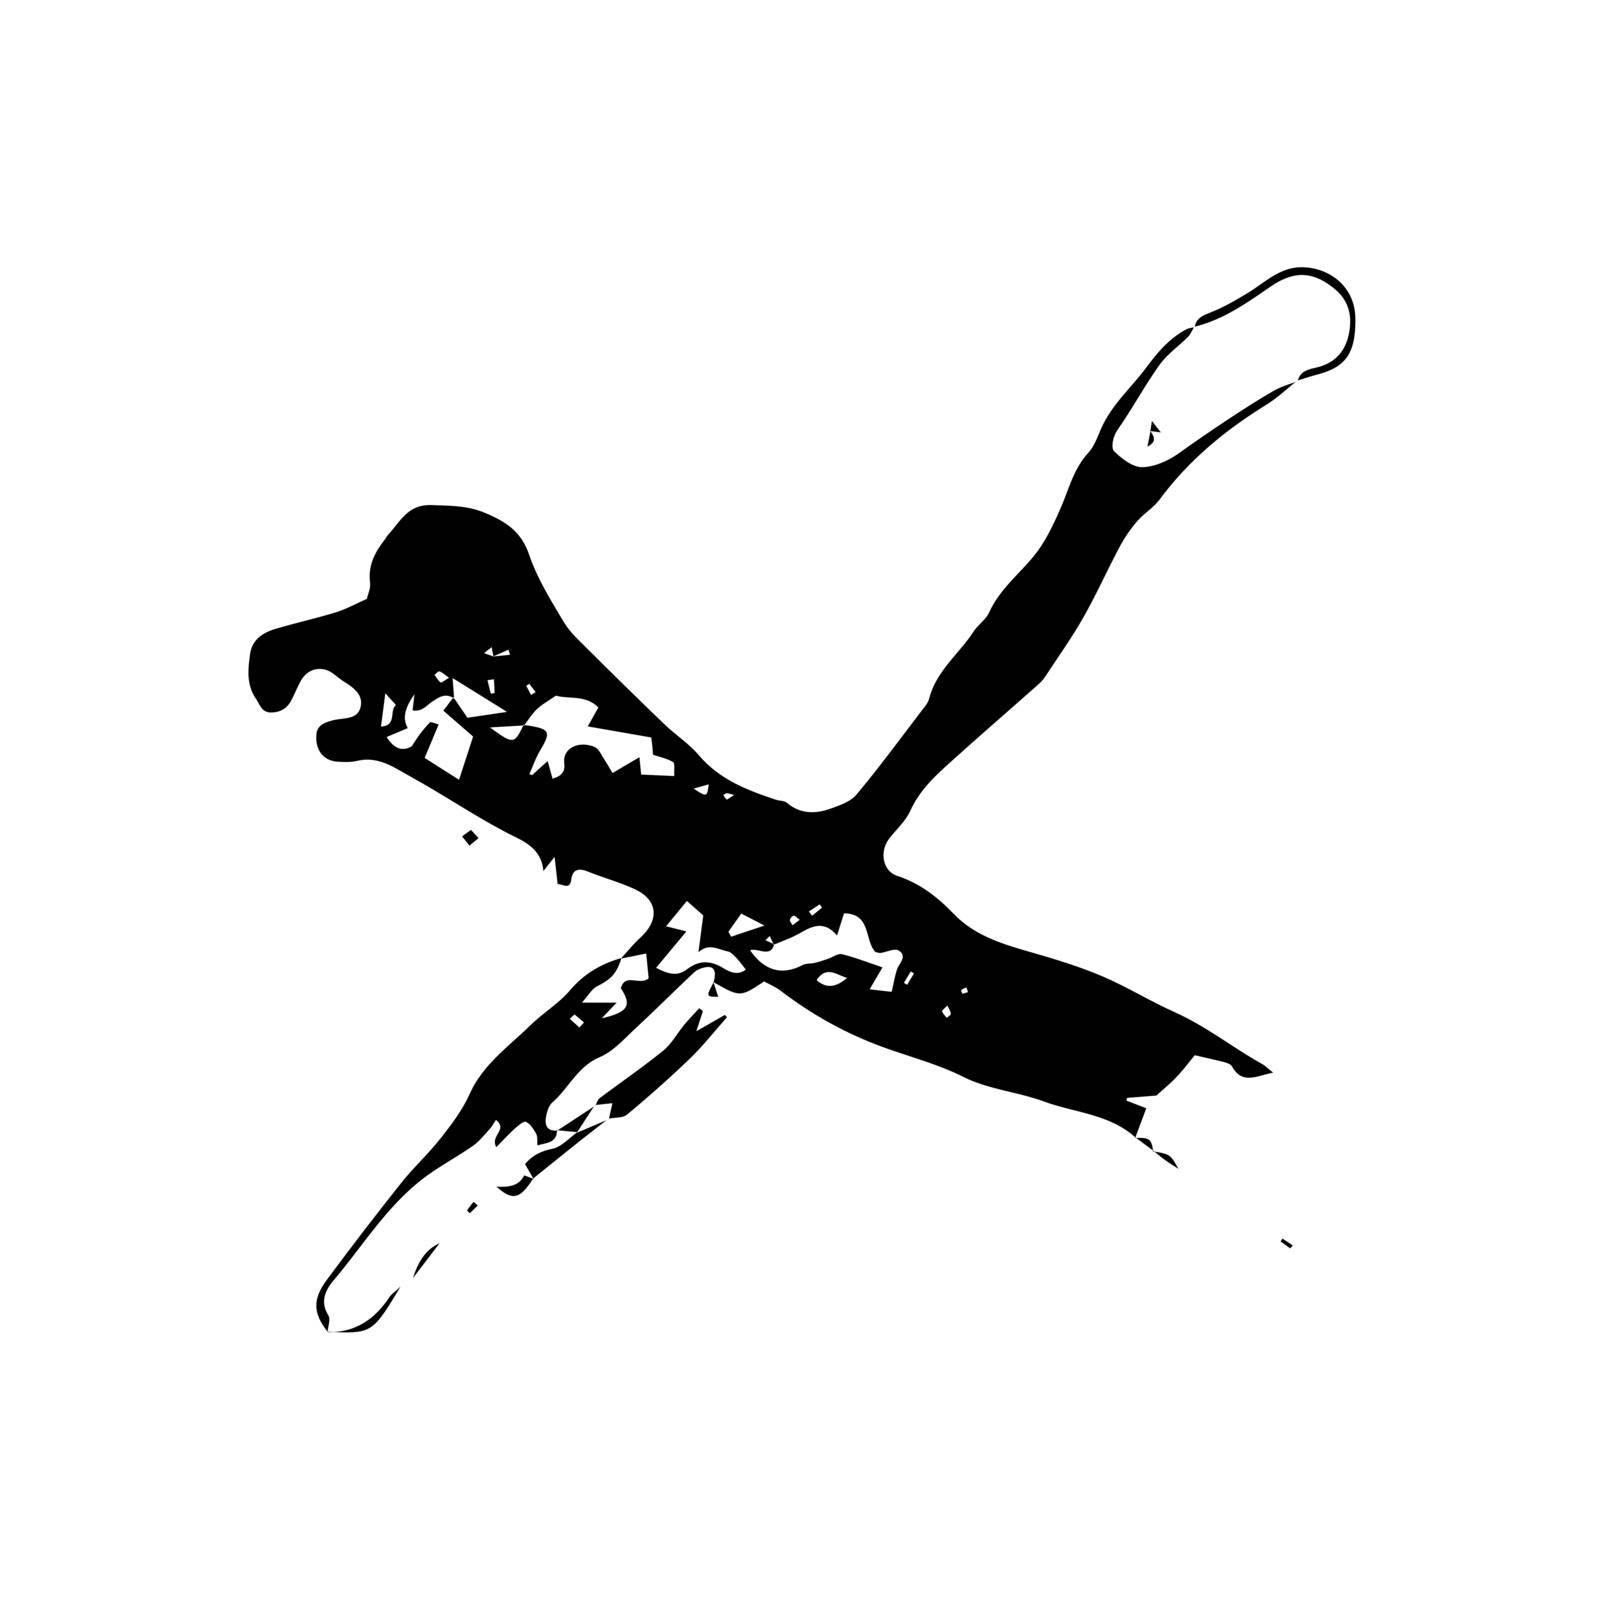 Grunge ink spot shape x by olegkozyrev